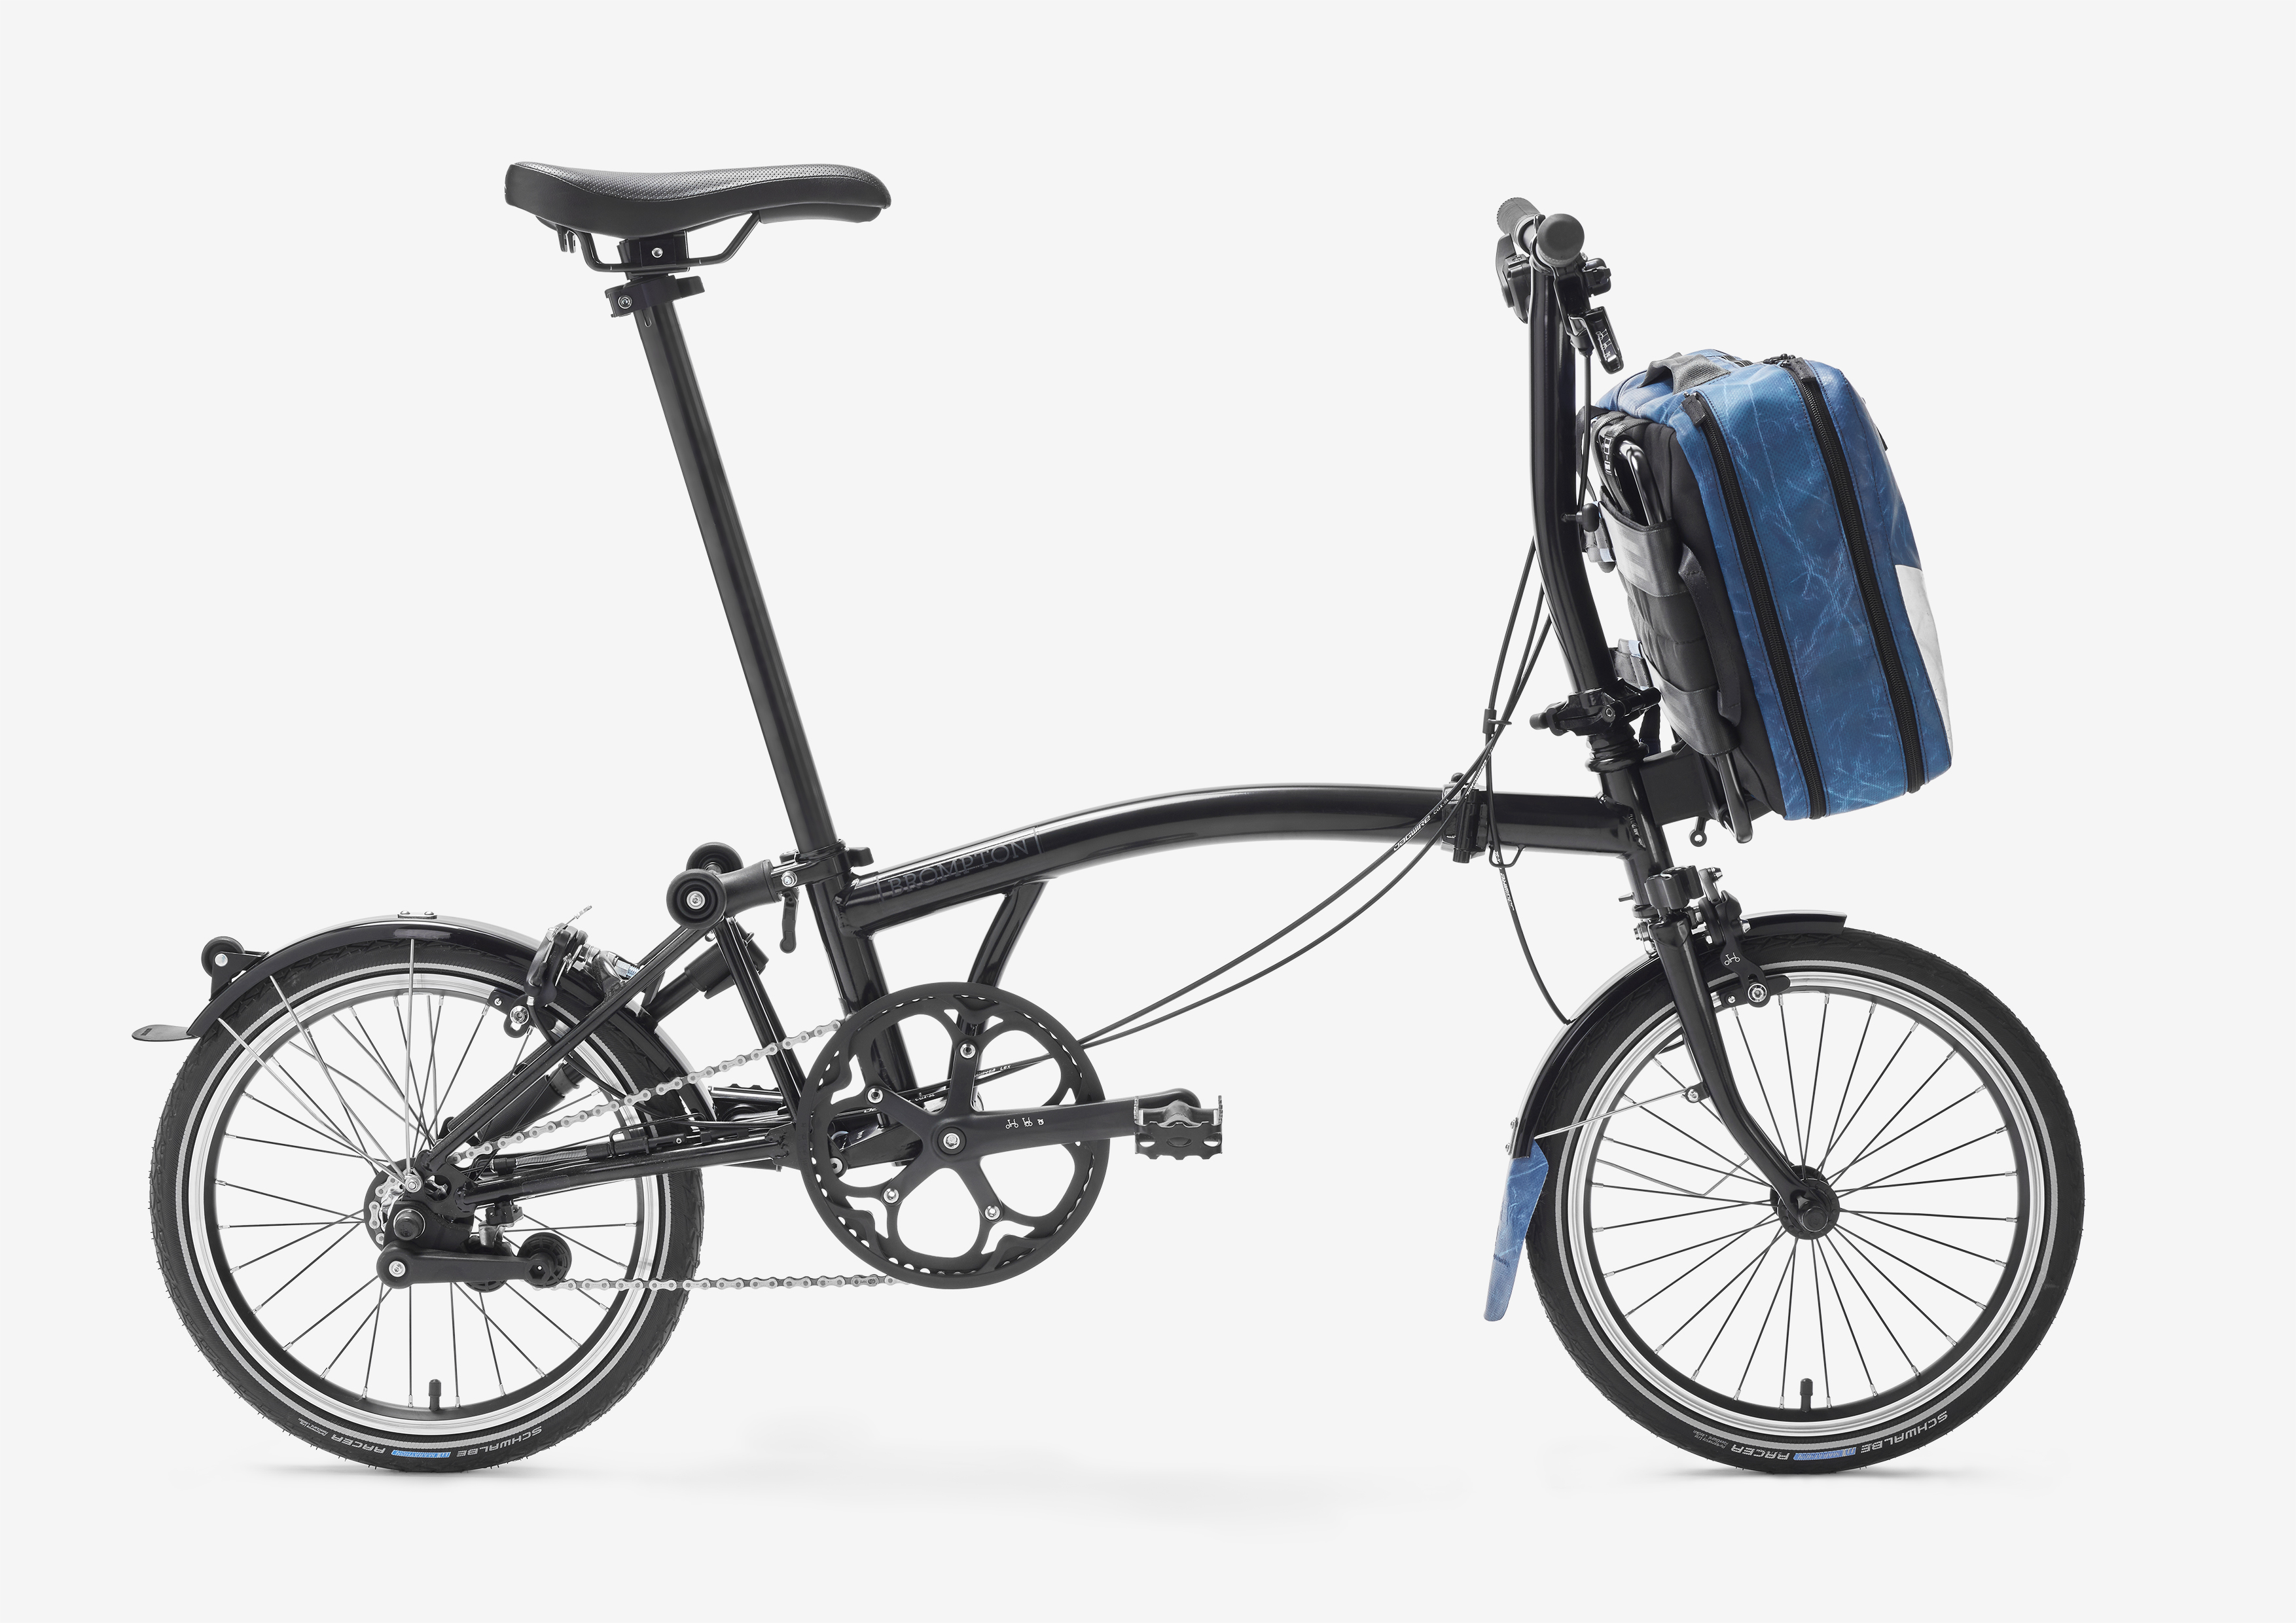 Swiss brand Freitag designs bag for the iconic Brompton bike